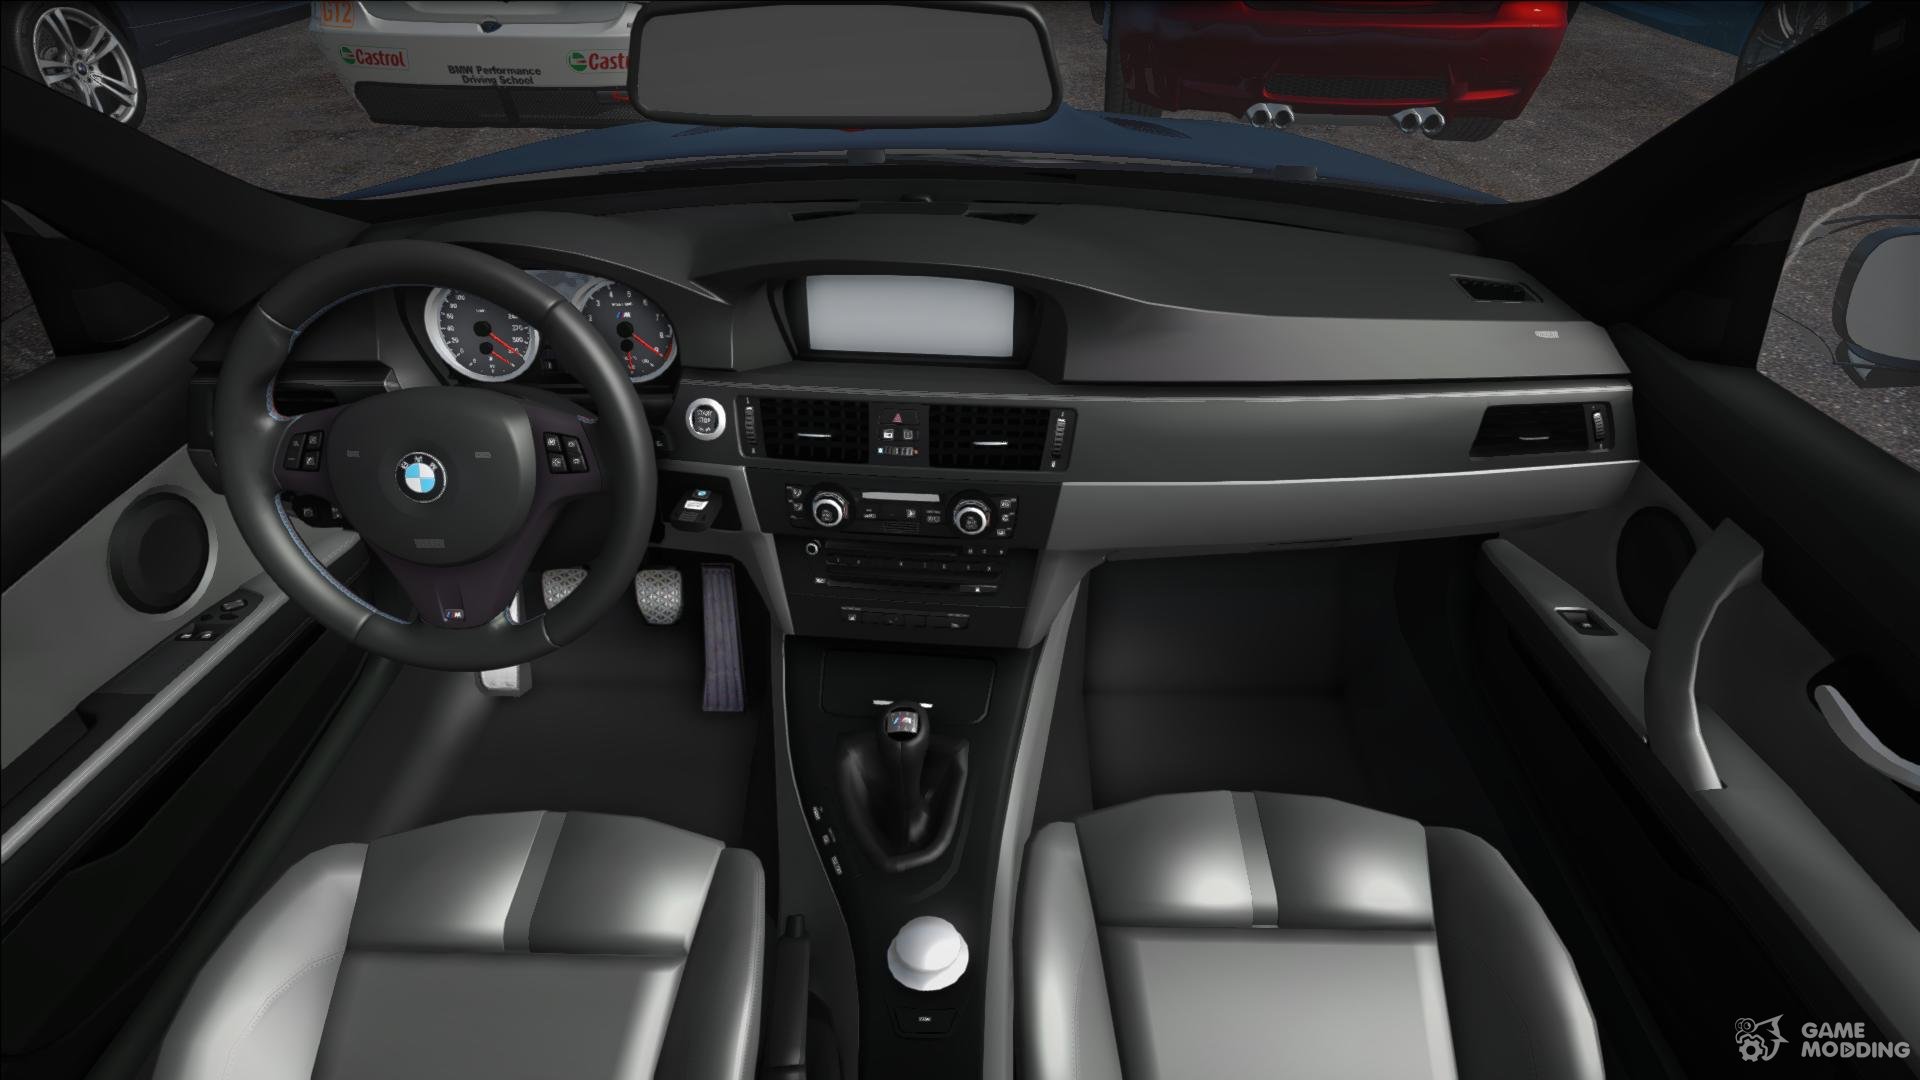 BMW E93 Convertible Black Leather Interior Seats Heated & Memory Door  Cards #020 | eBay